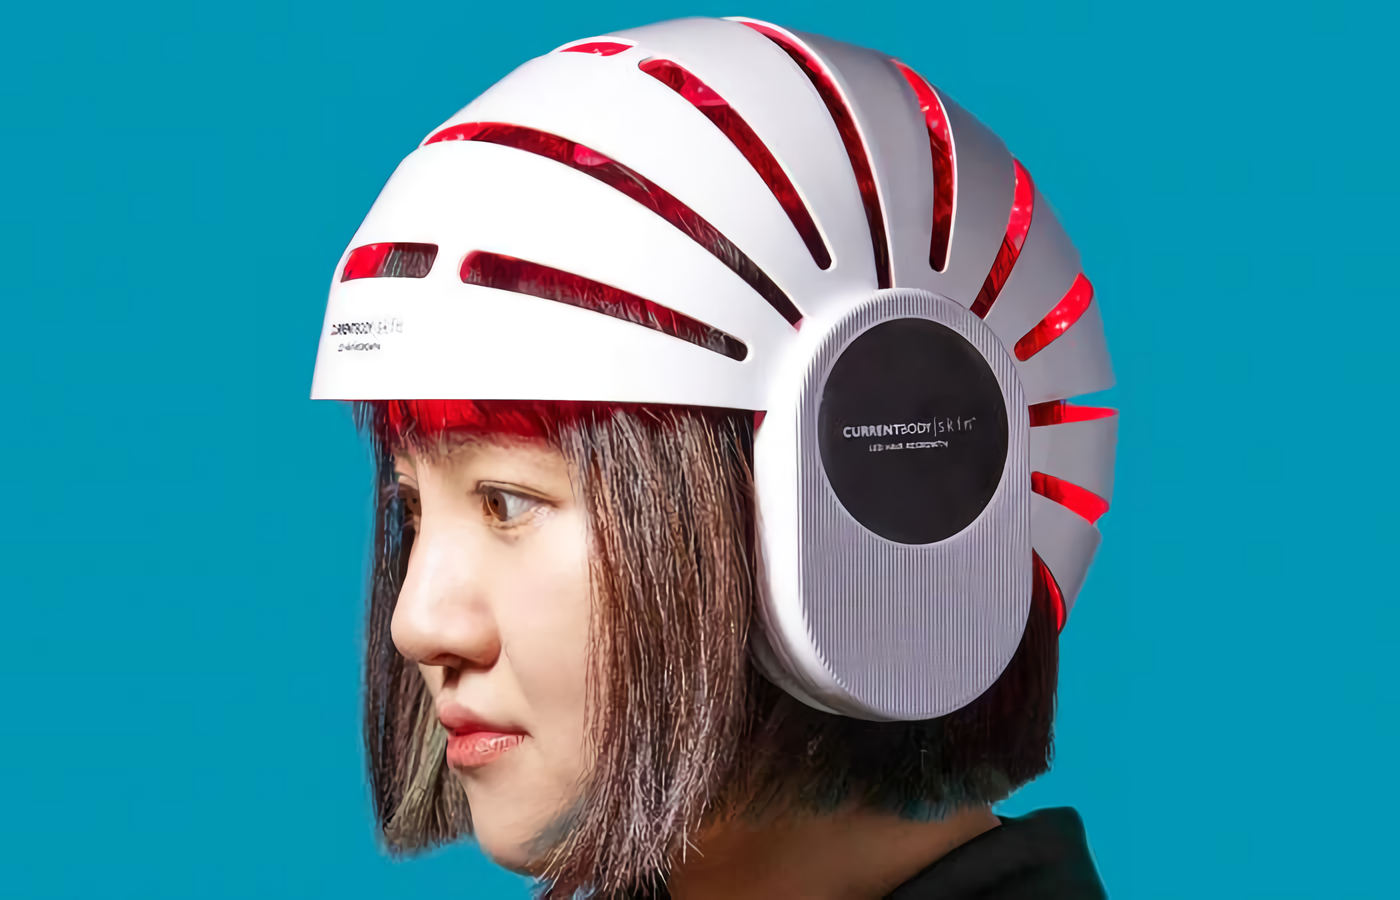 CurrentBody Skin LED: wireless headphones that treat... baldness